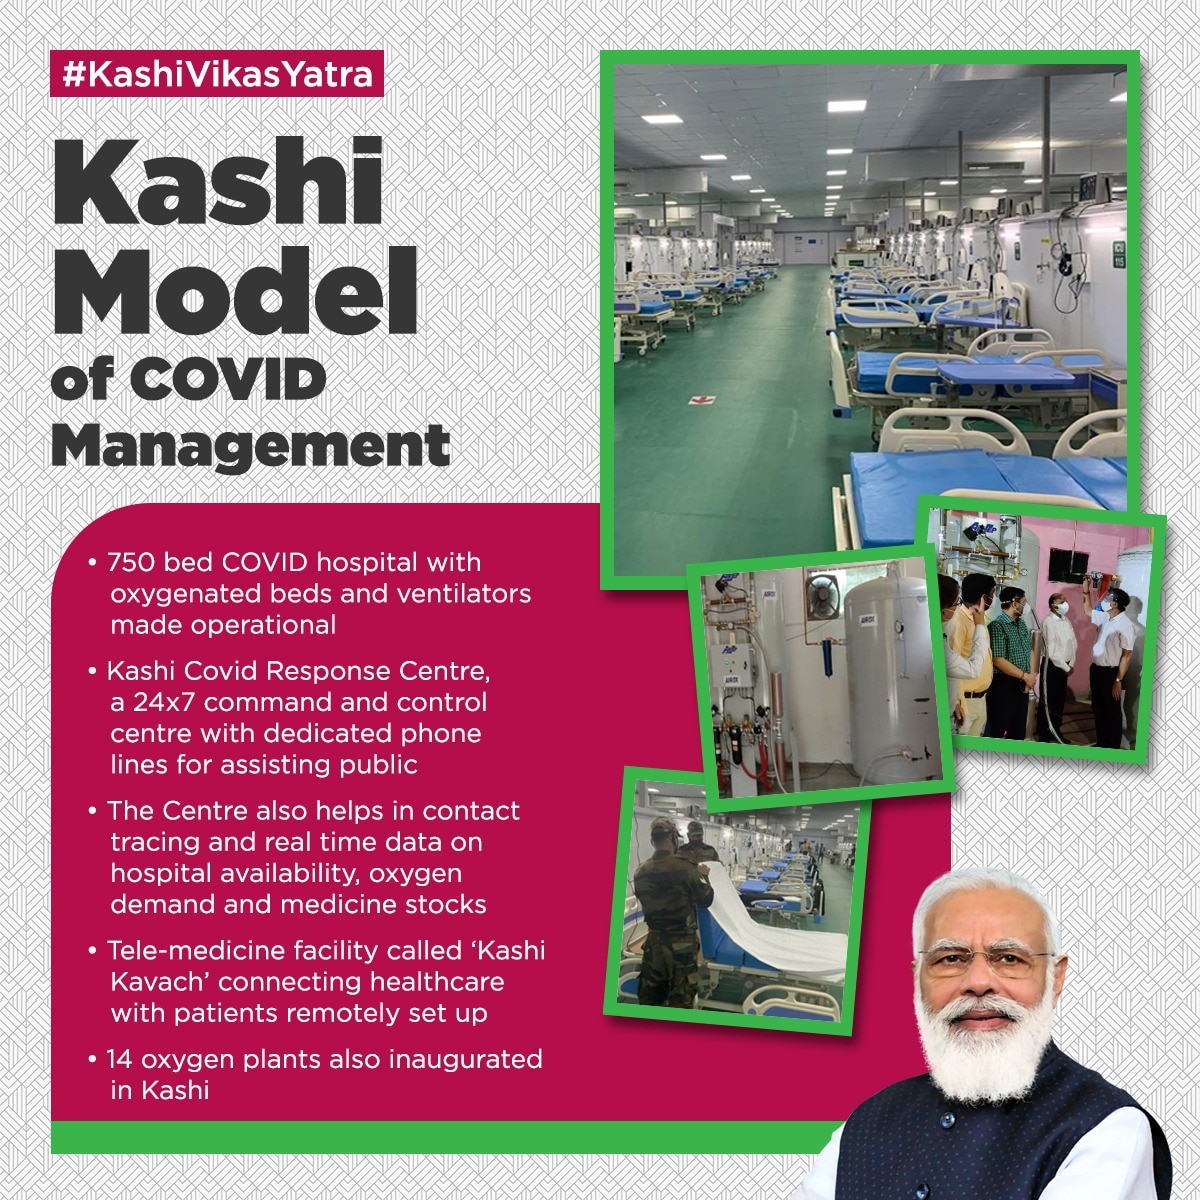 Kashi model of covid management